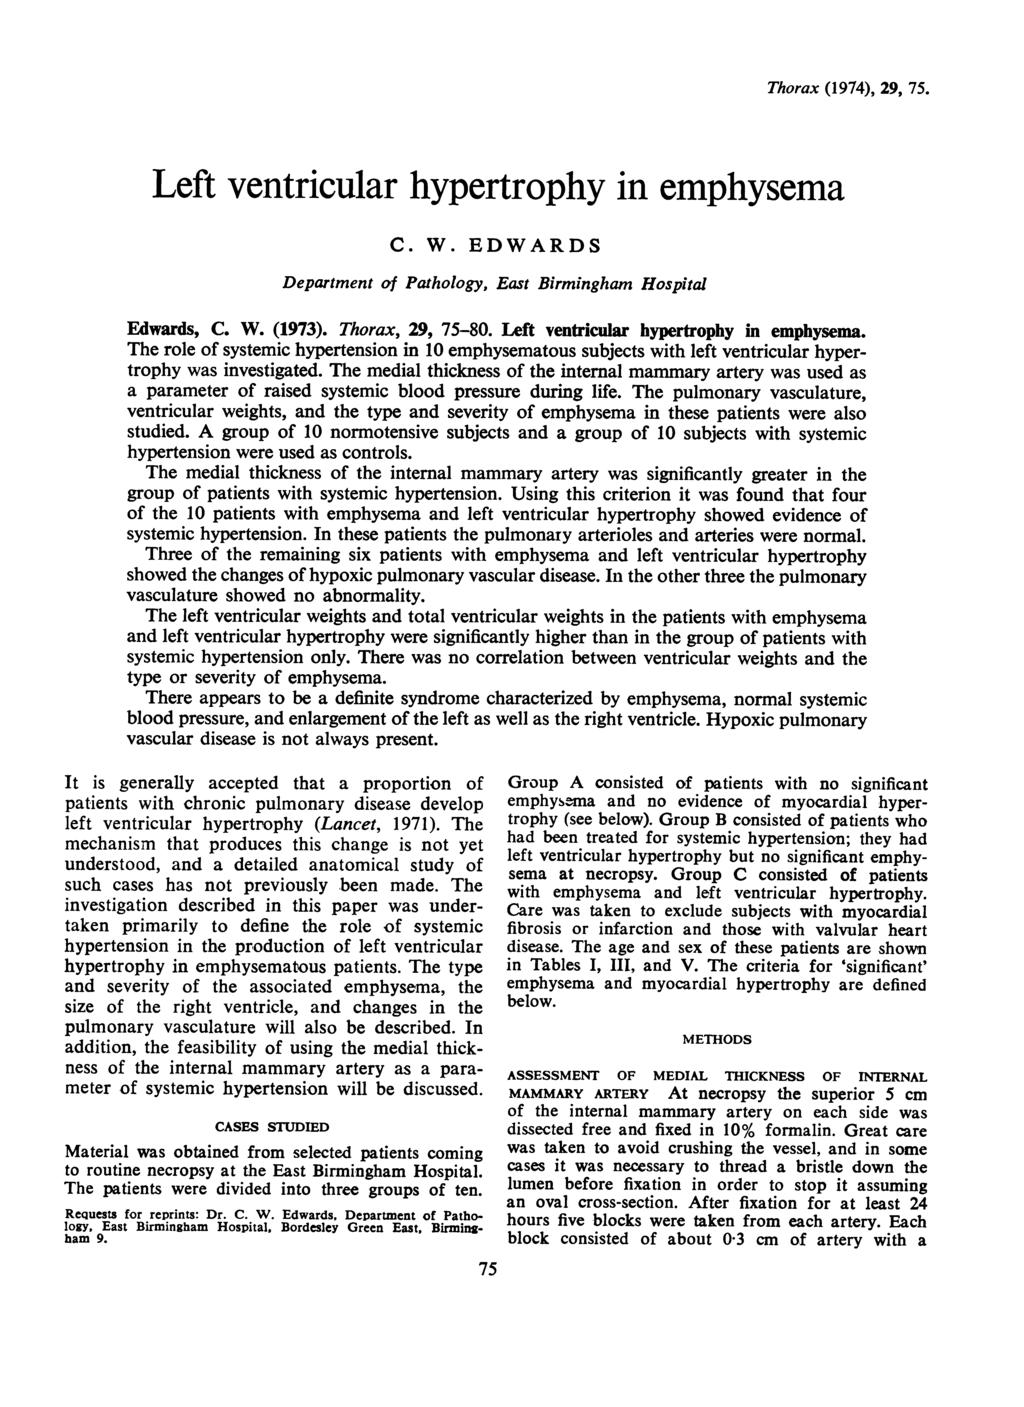 Left ventricular hypertrophy in emphysema C. W. EDWARDS Department of Pathology, East Birmingham Hospital Thorax (1974), 29, 75. Edwards, C. W. (1973). Thorax, 29, 75-80.